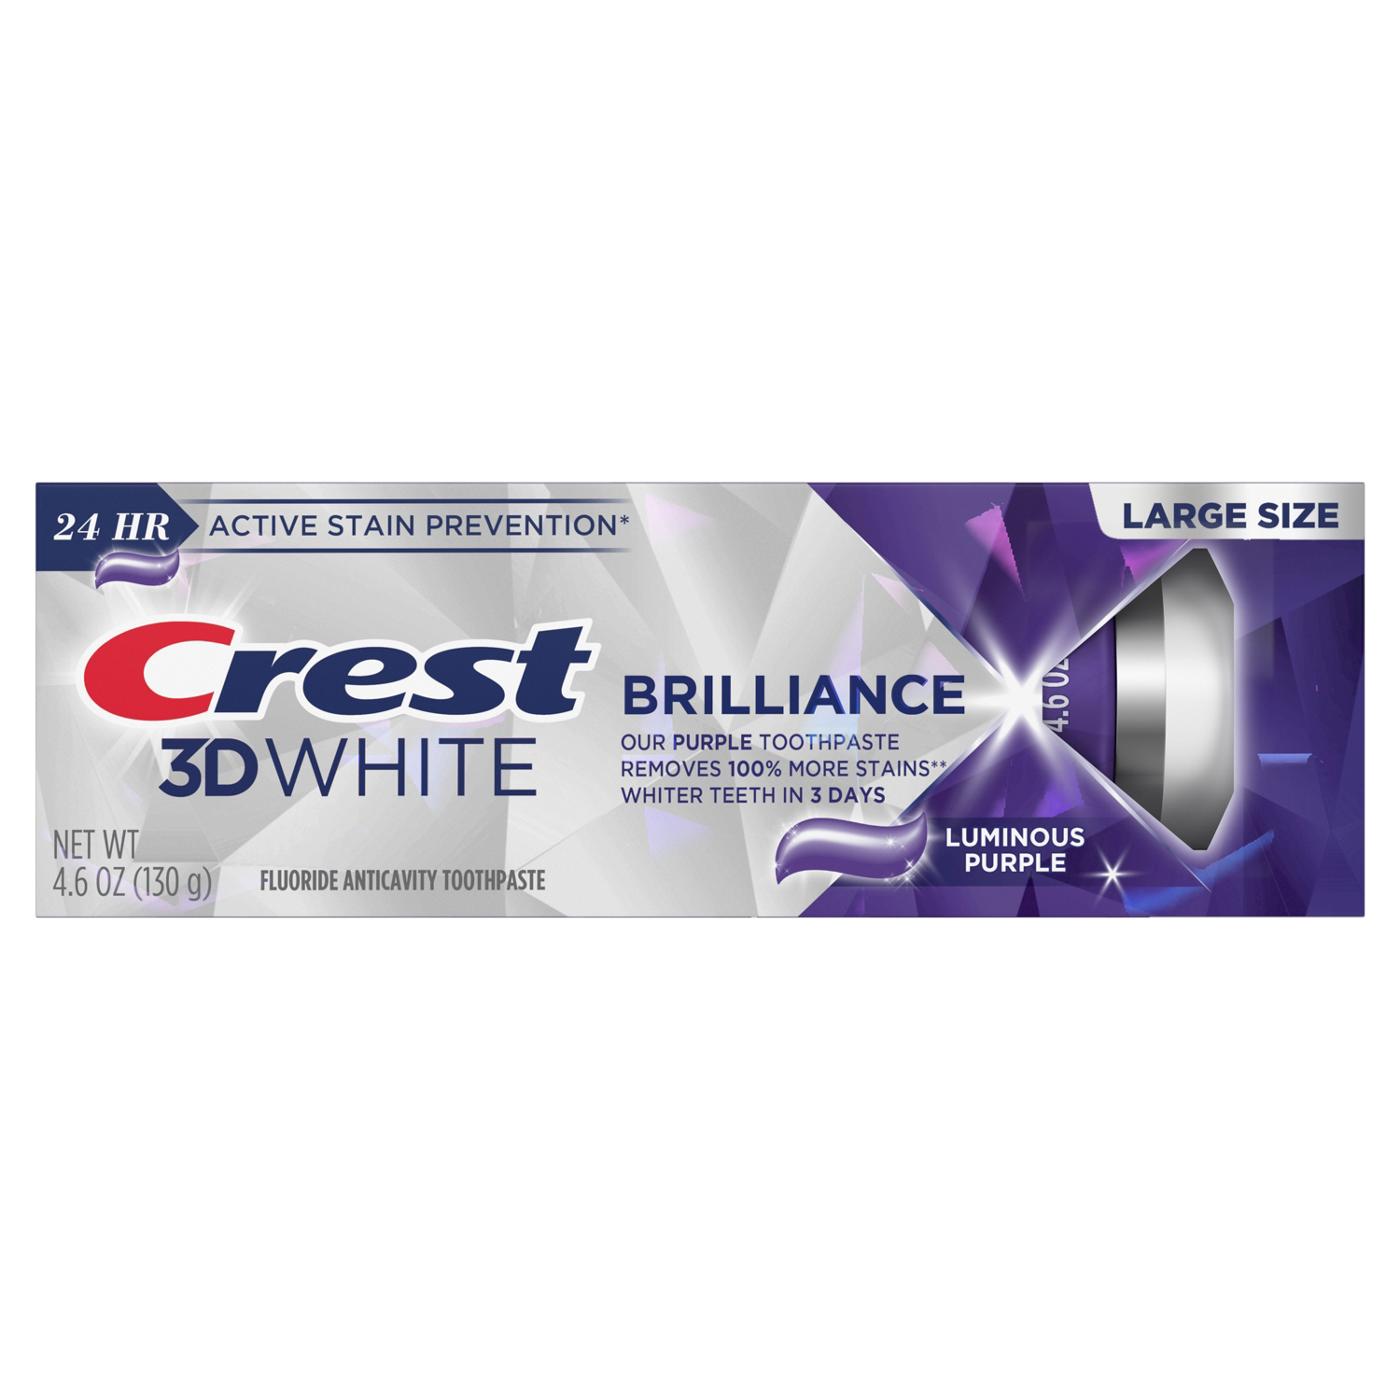 Crest 3D White Brilliance Toothpaste - Luminous Purple; image 1 of 8